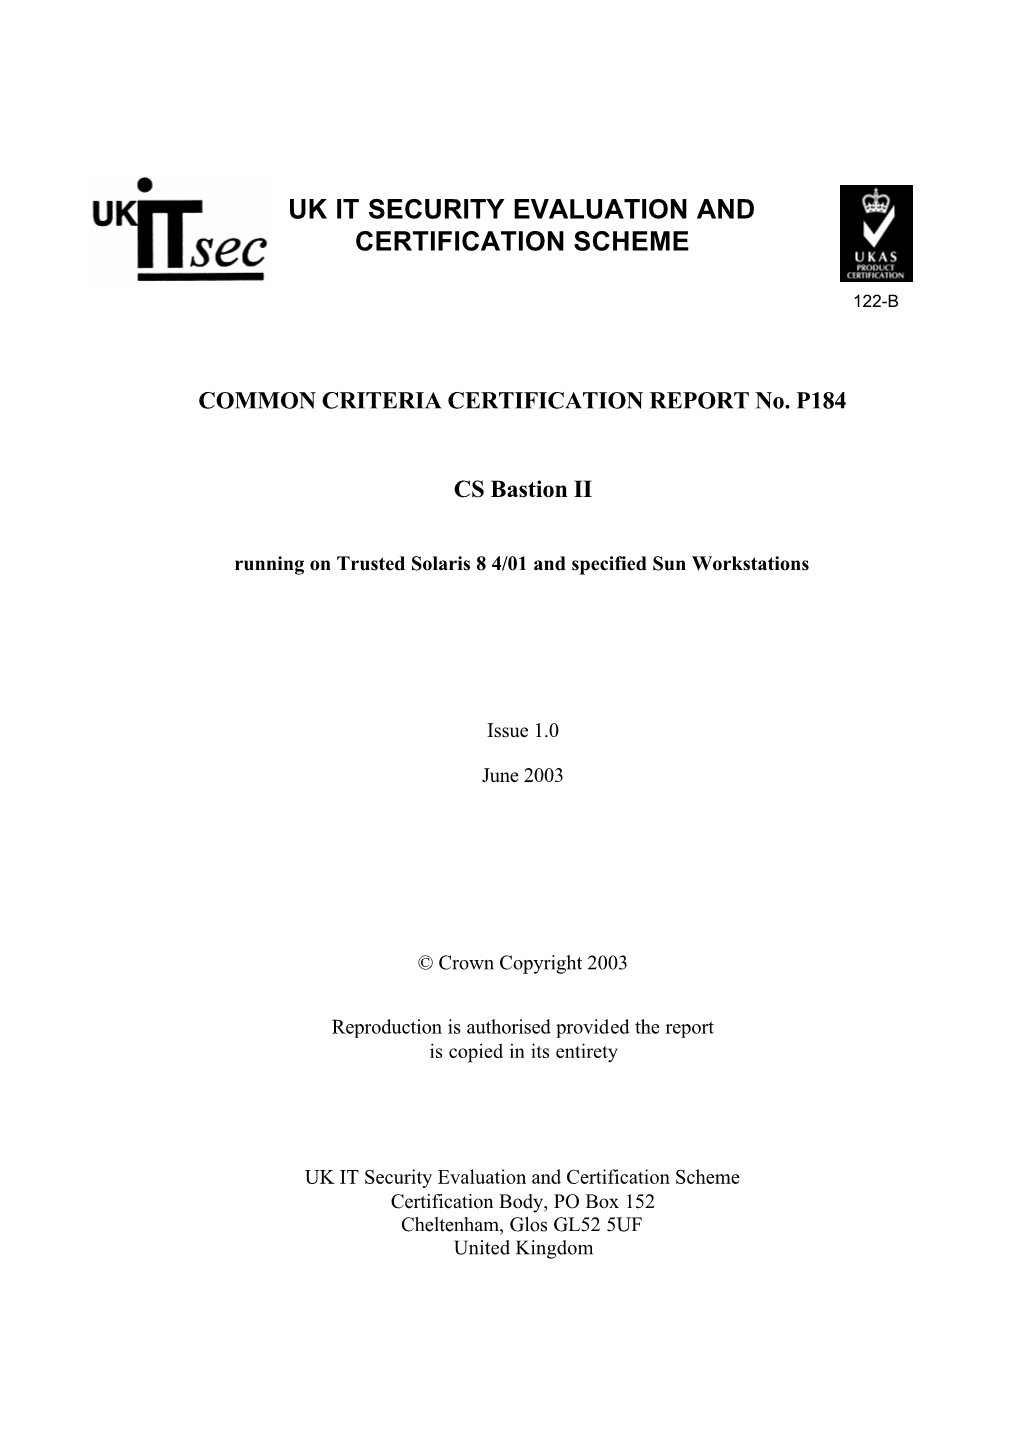 Certification Report No P184